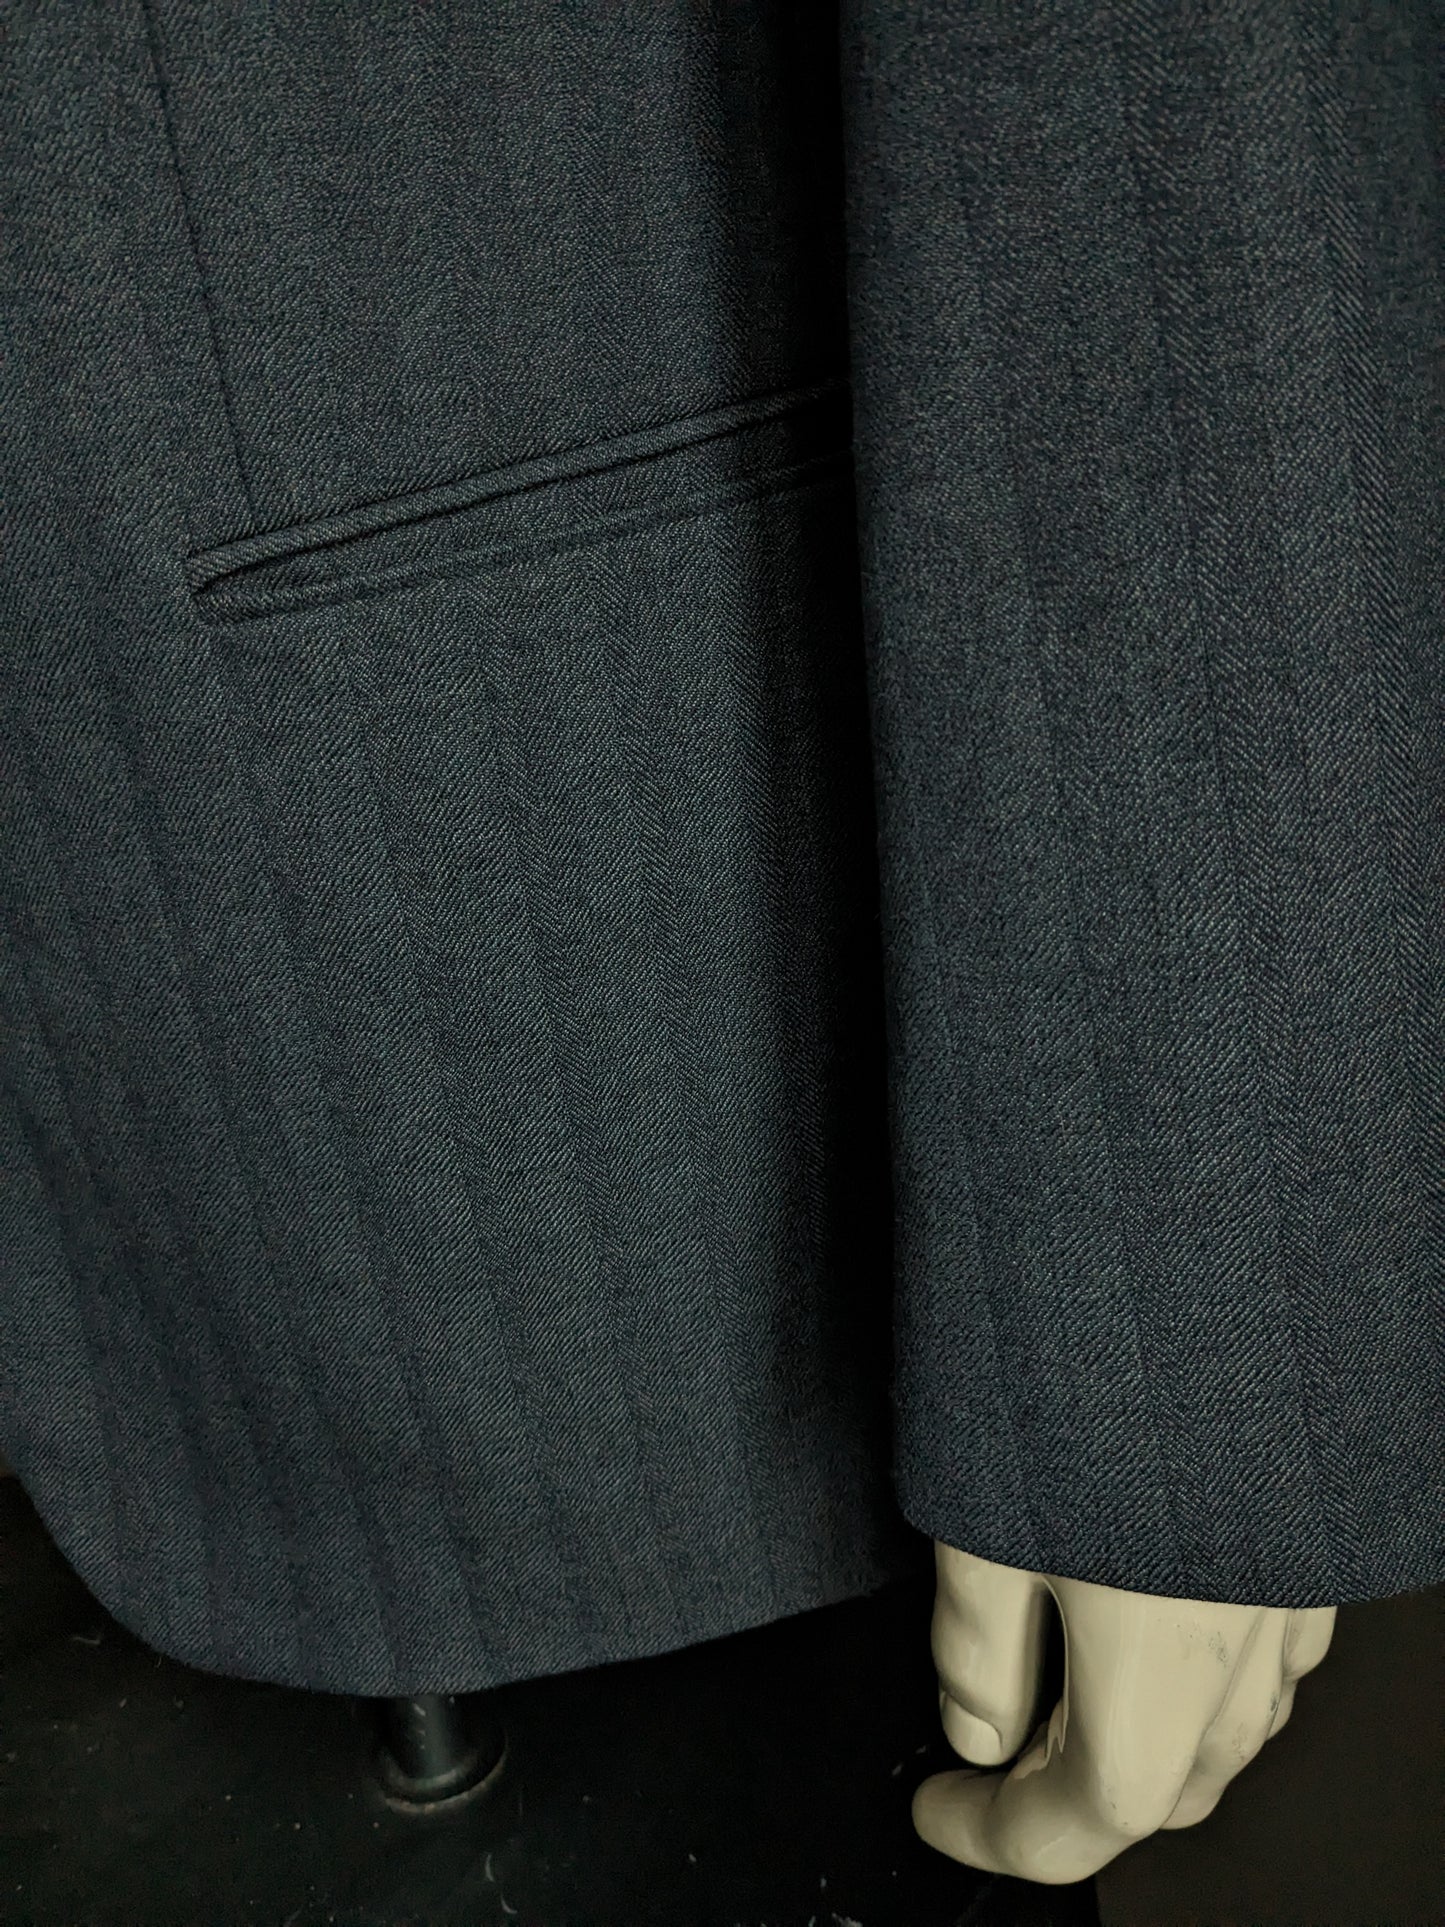 Chaqueta de lana de Varteks. Motivo gris de espiga negra. Tamaño 56 / xl. 45% de lana.